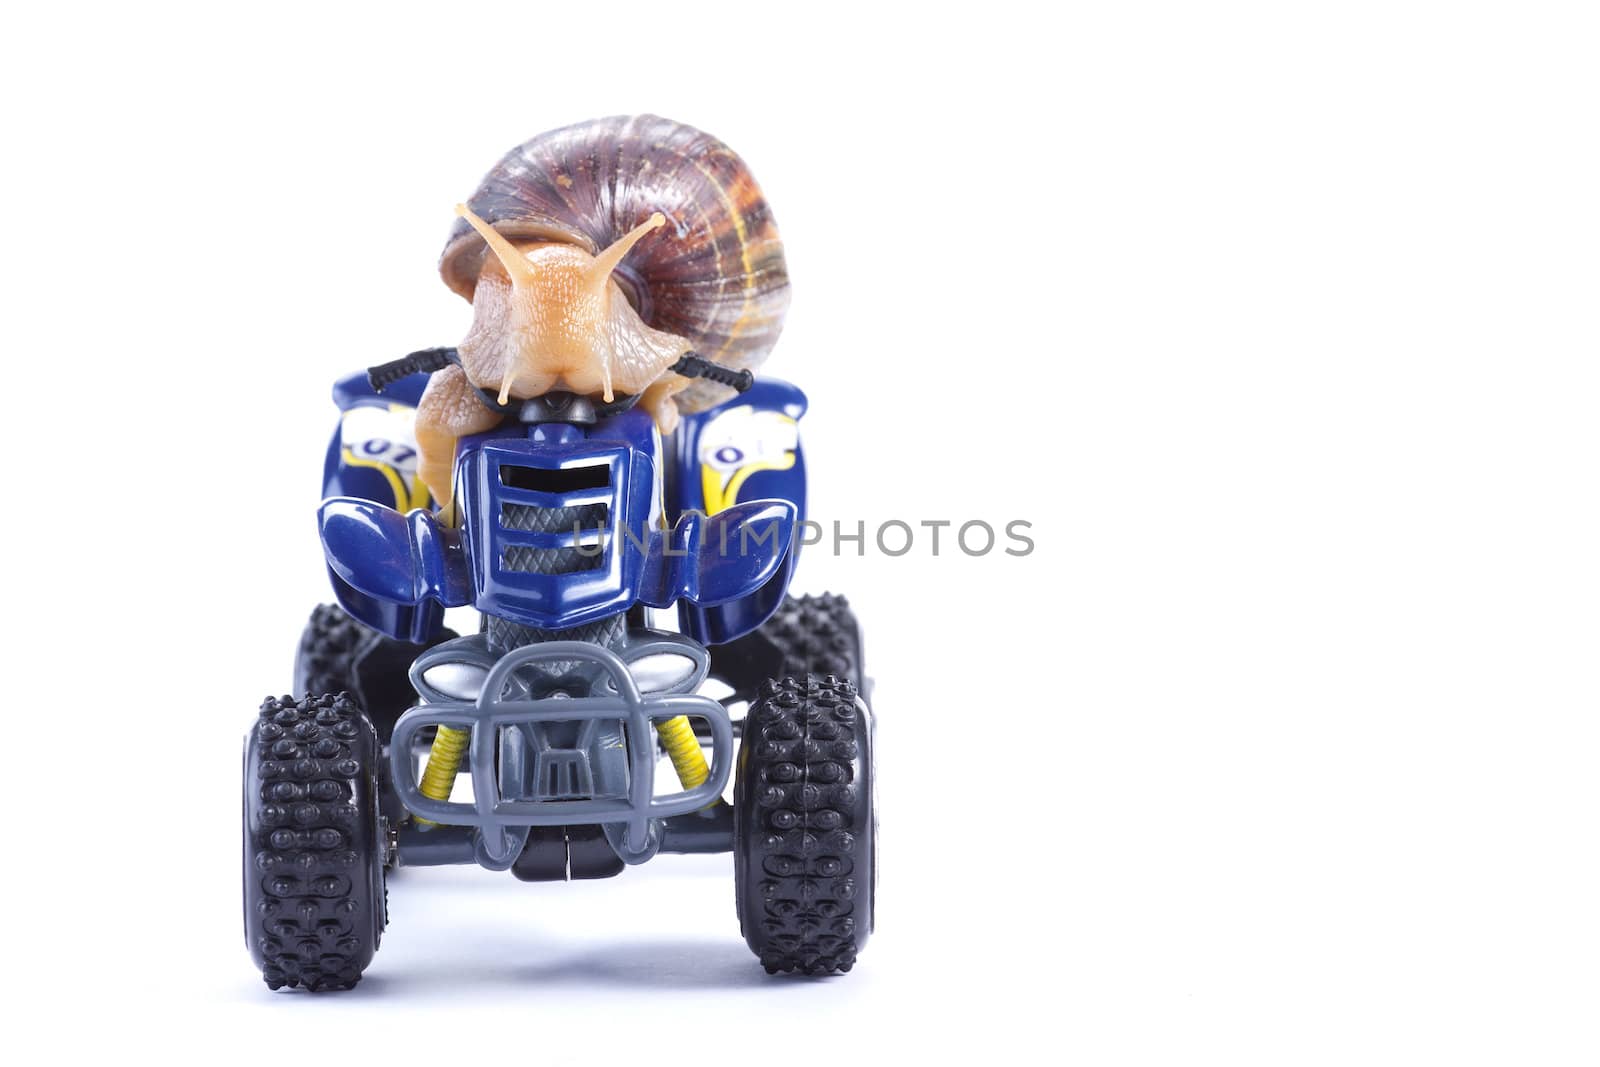 Snail riding a quad by dario_lo_presti